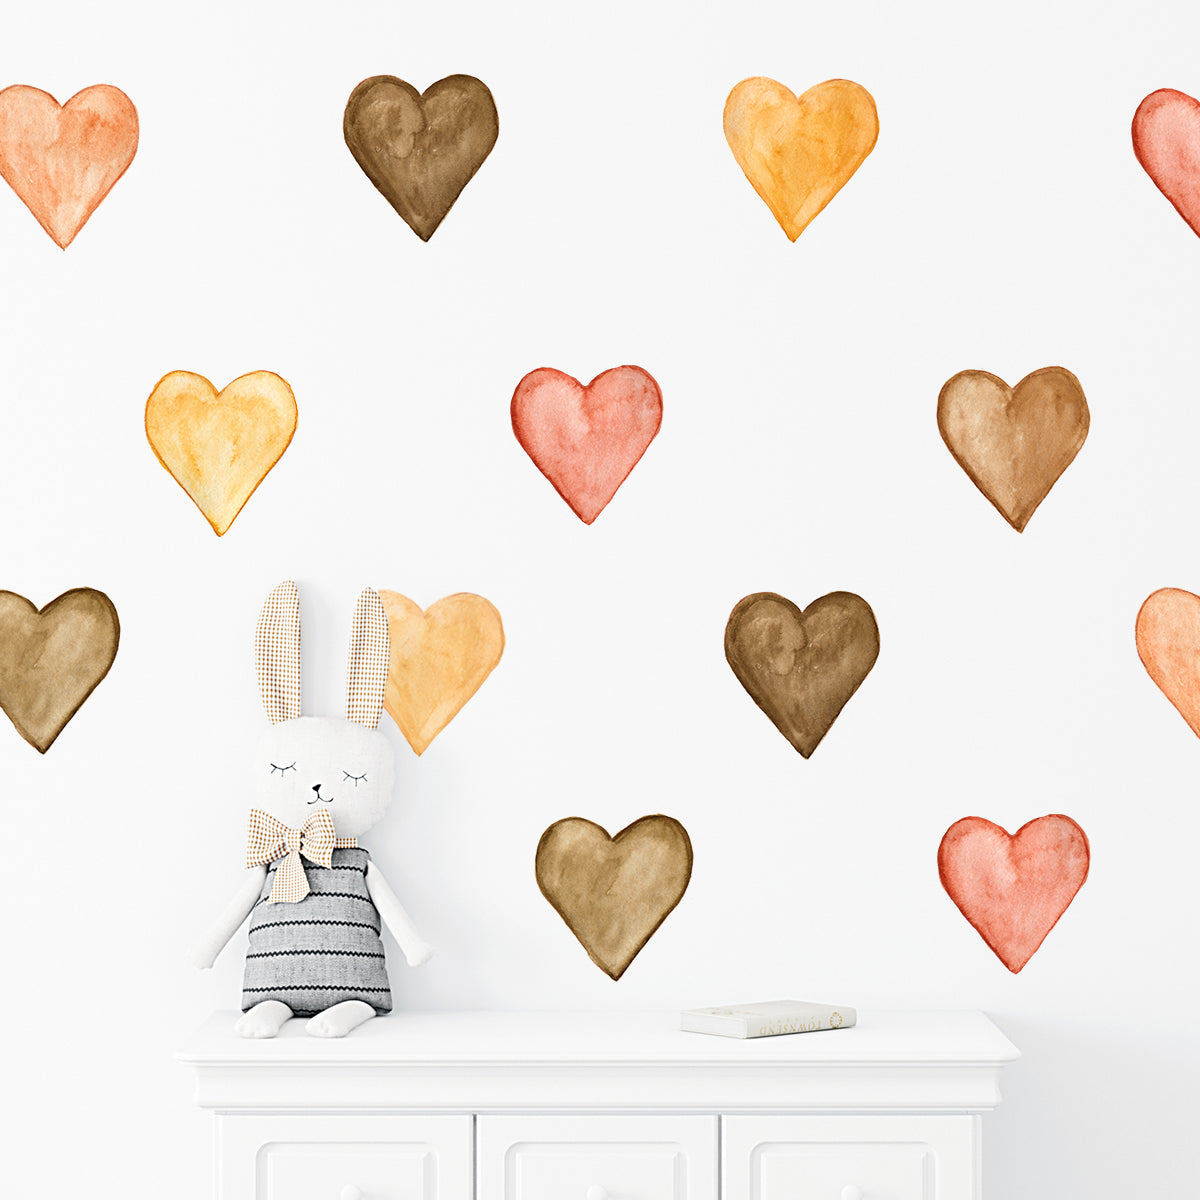 Boho Hearts Wall Decal Stickers